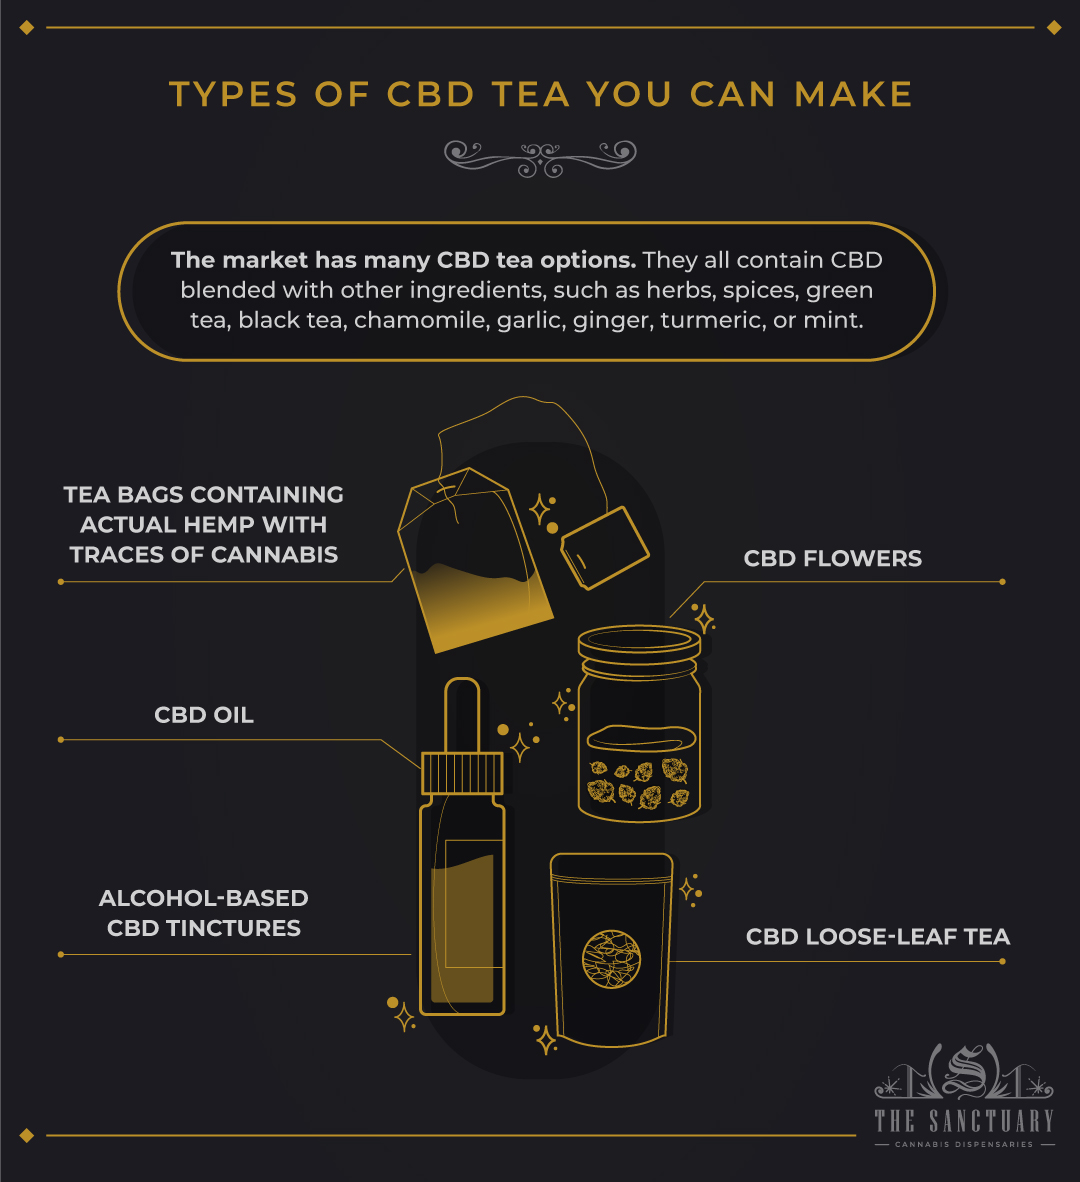 Types of CBD Tea You Can Make